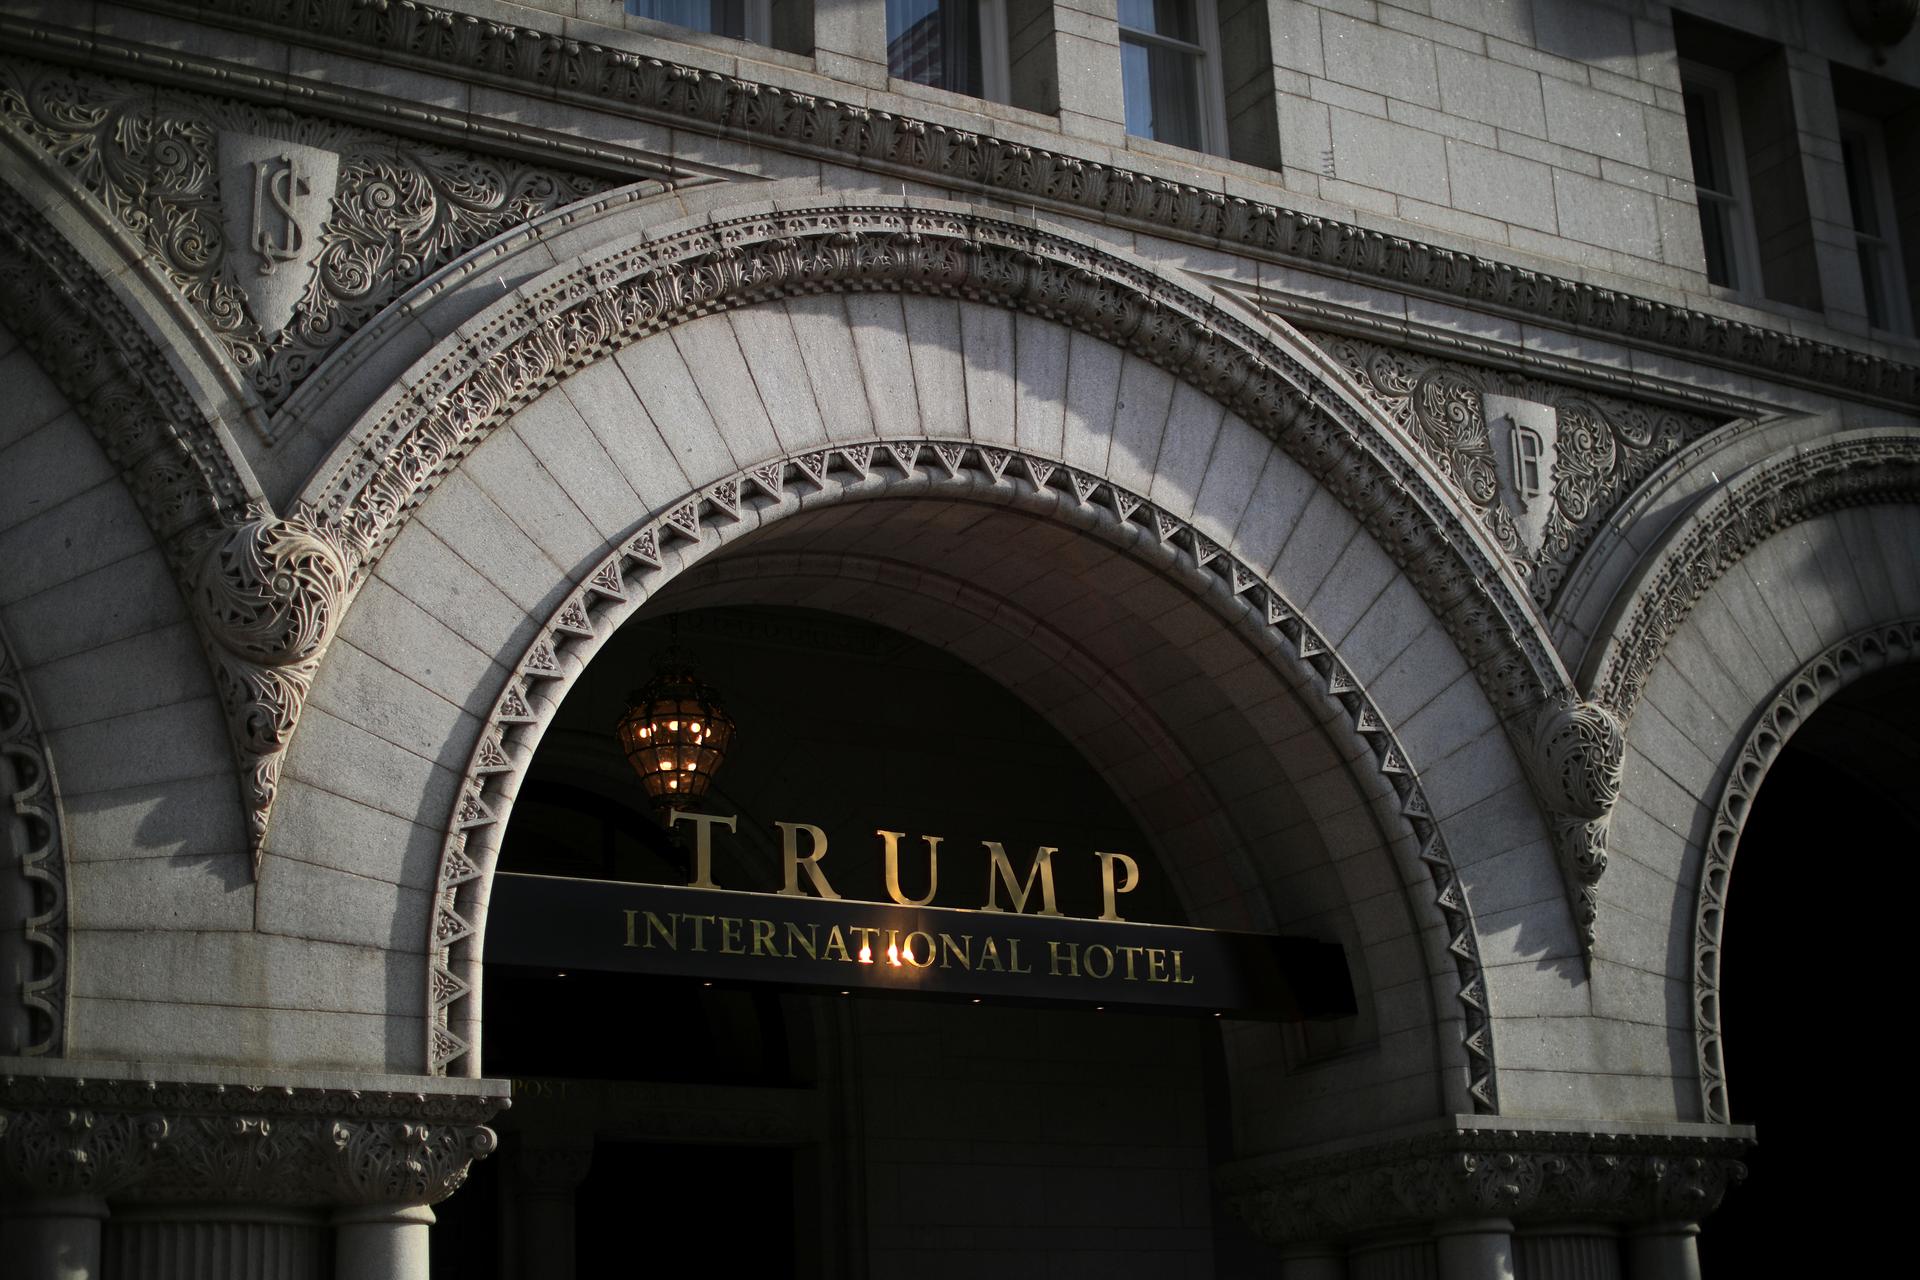 The entrance of Trump International Hotel